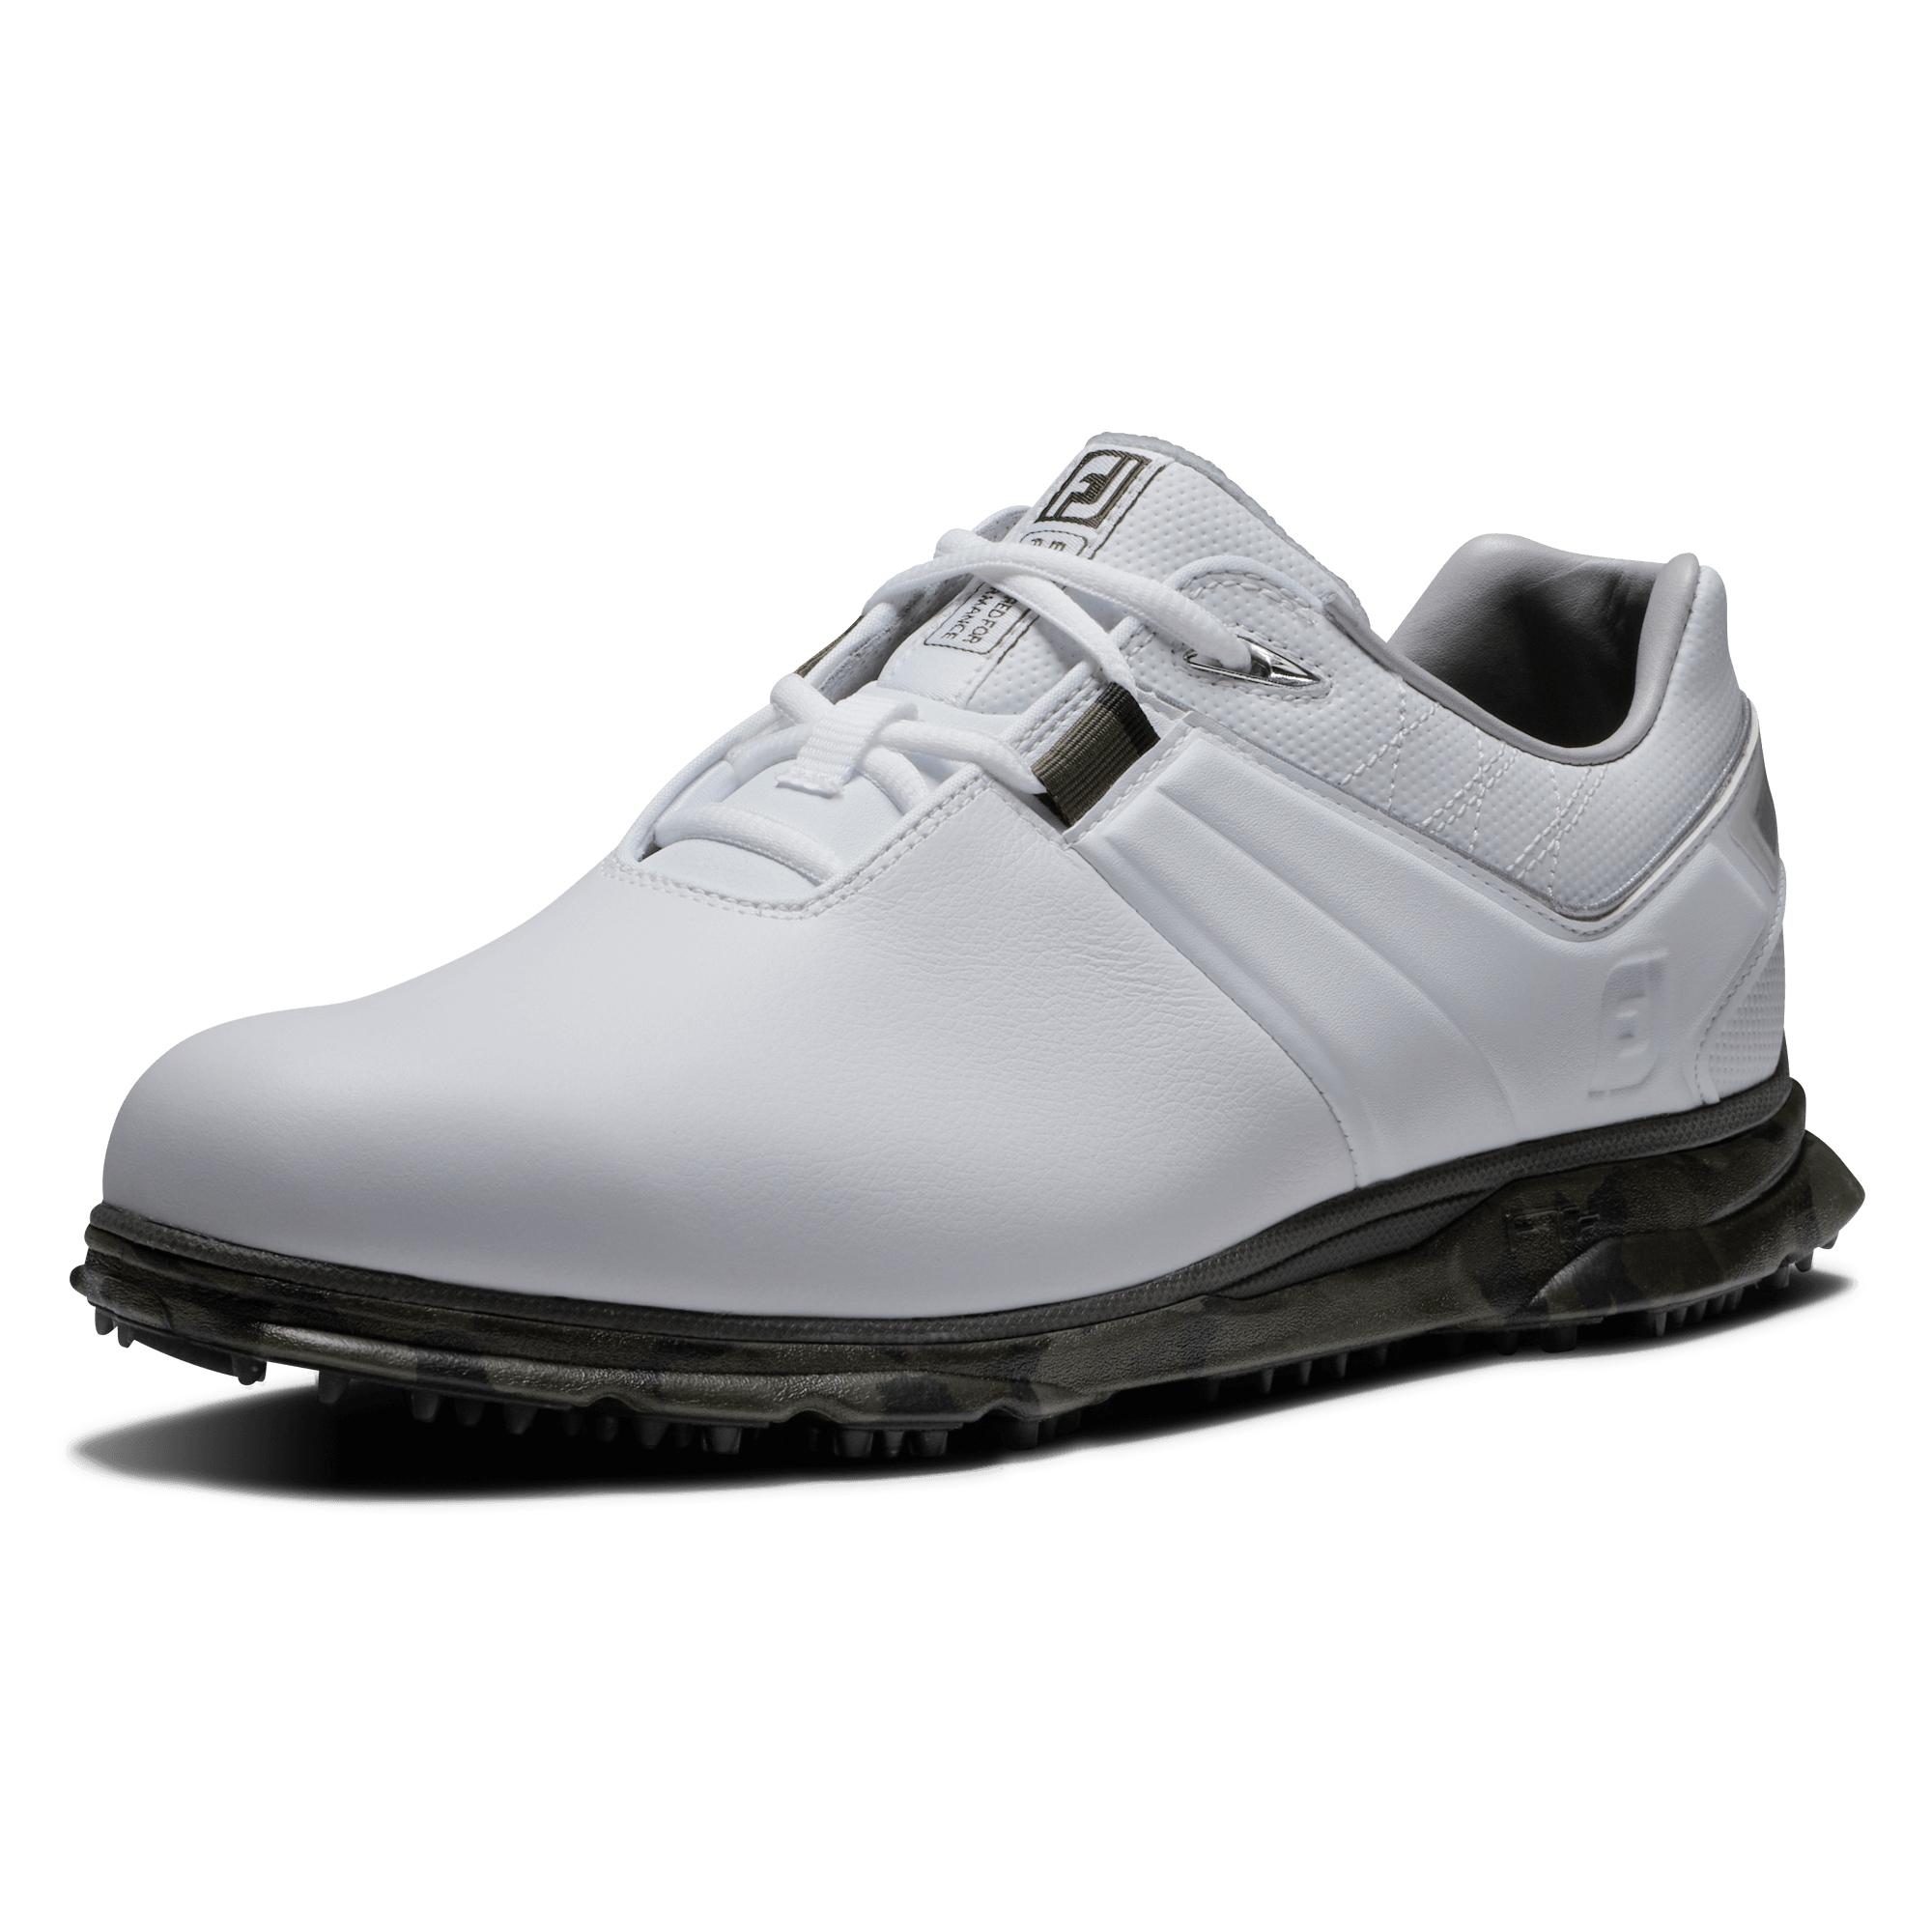 FootJoy Pro SL Golf Shoes #53069 White/Camo | Scottsdale Golf